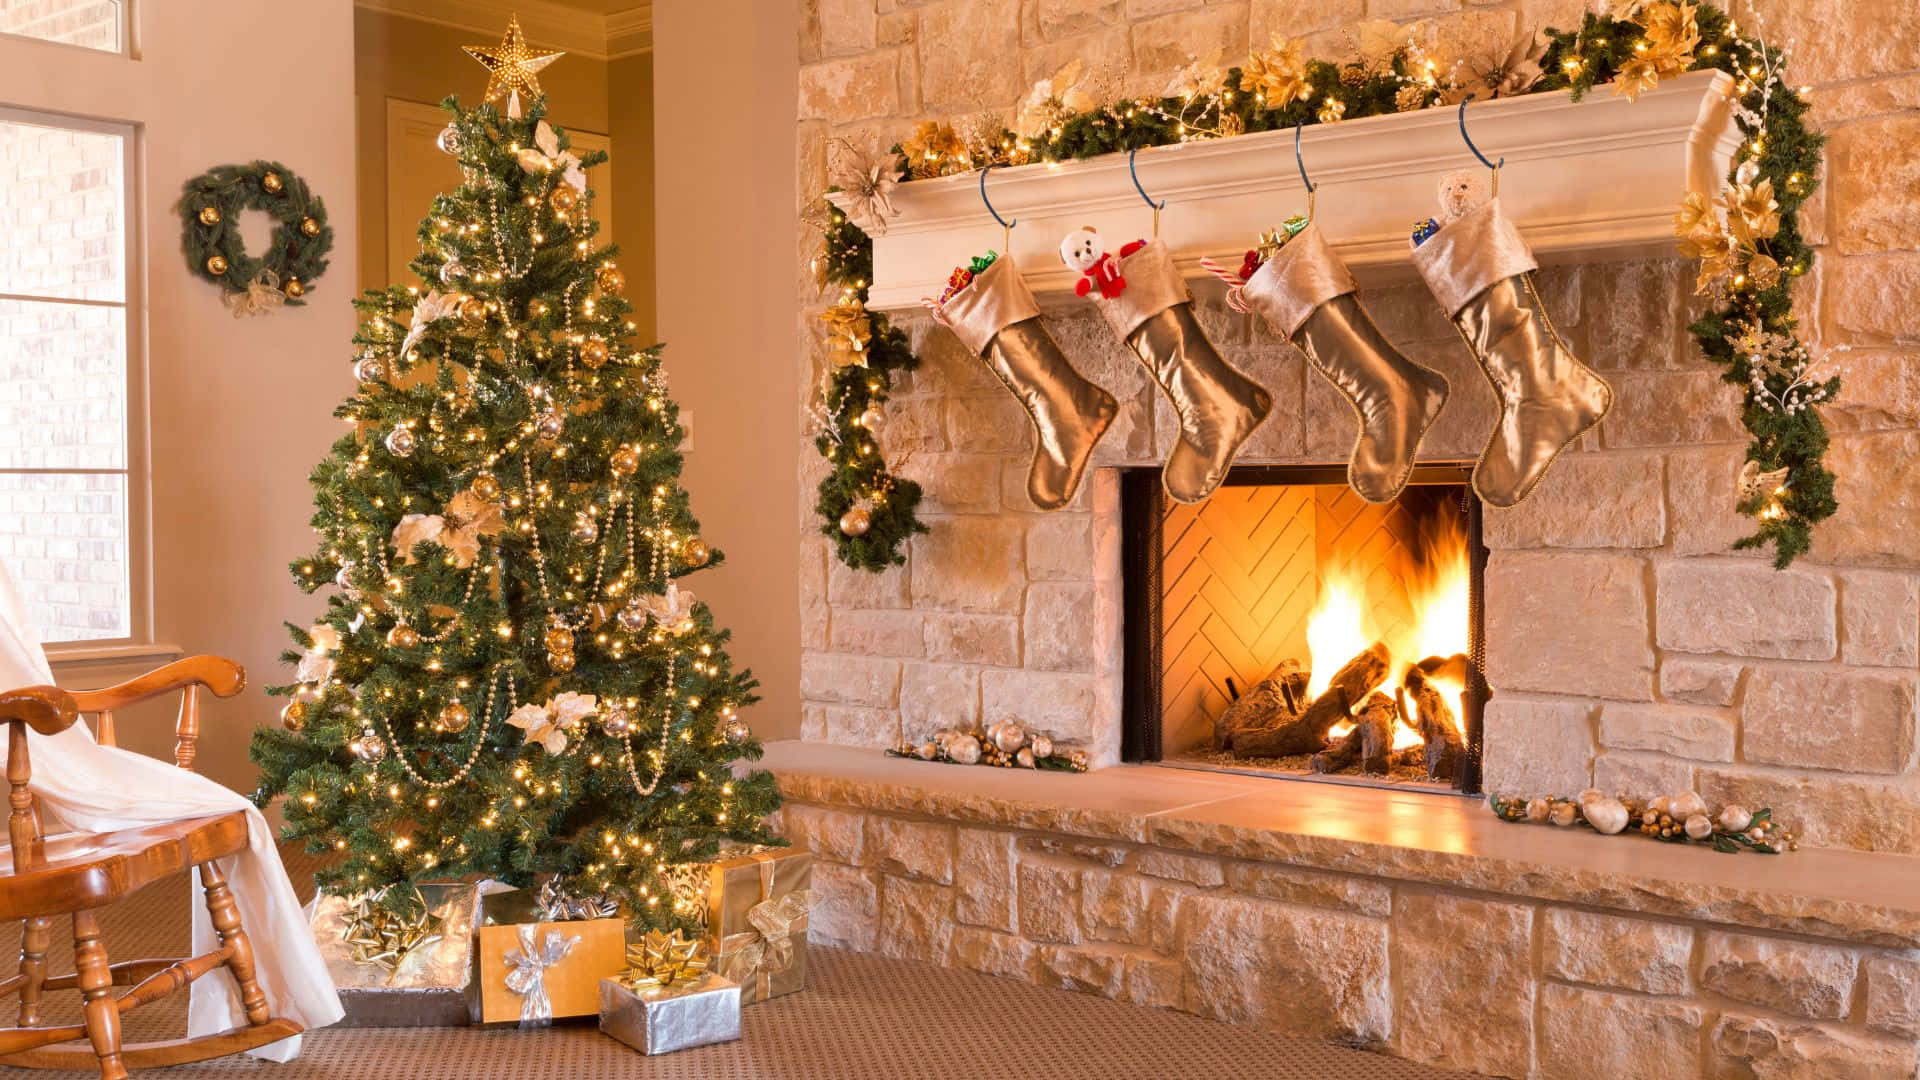 Cozy Christmas Fireplace Decorations.jpg Wallpaper